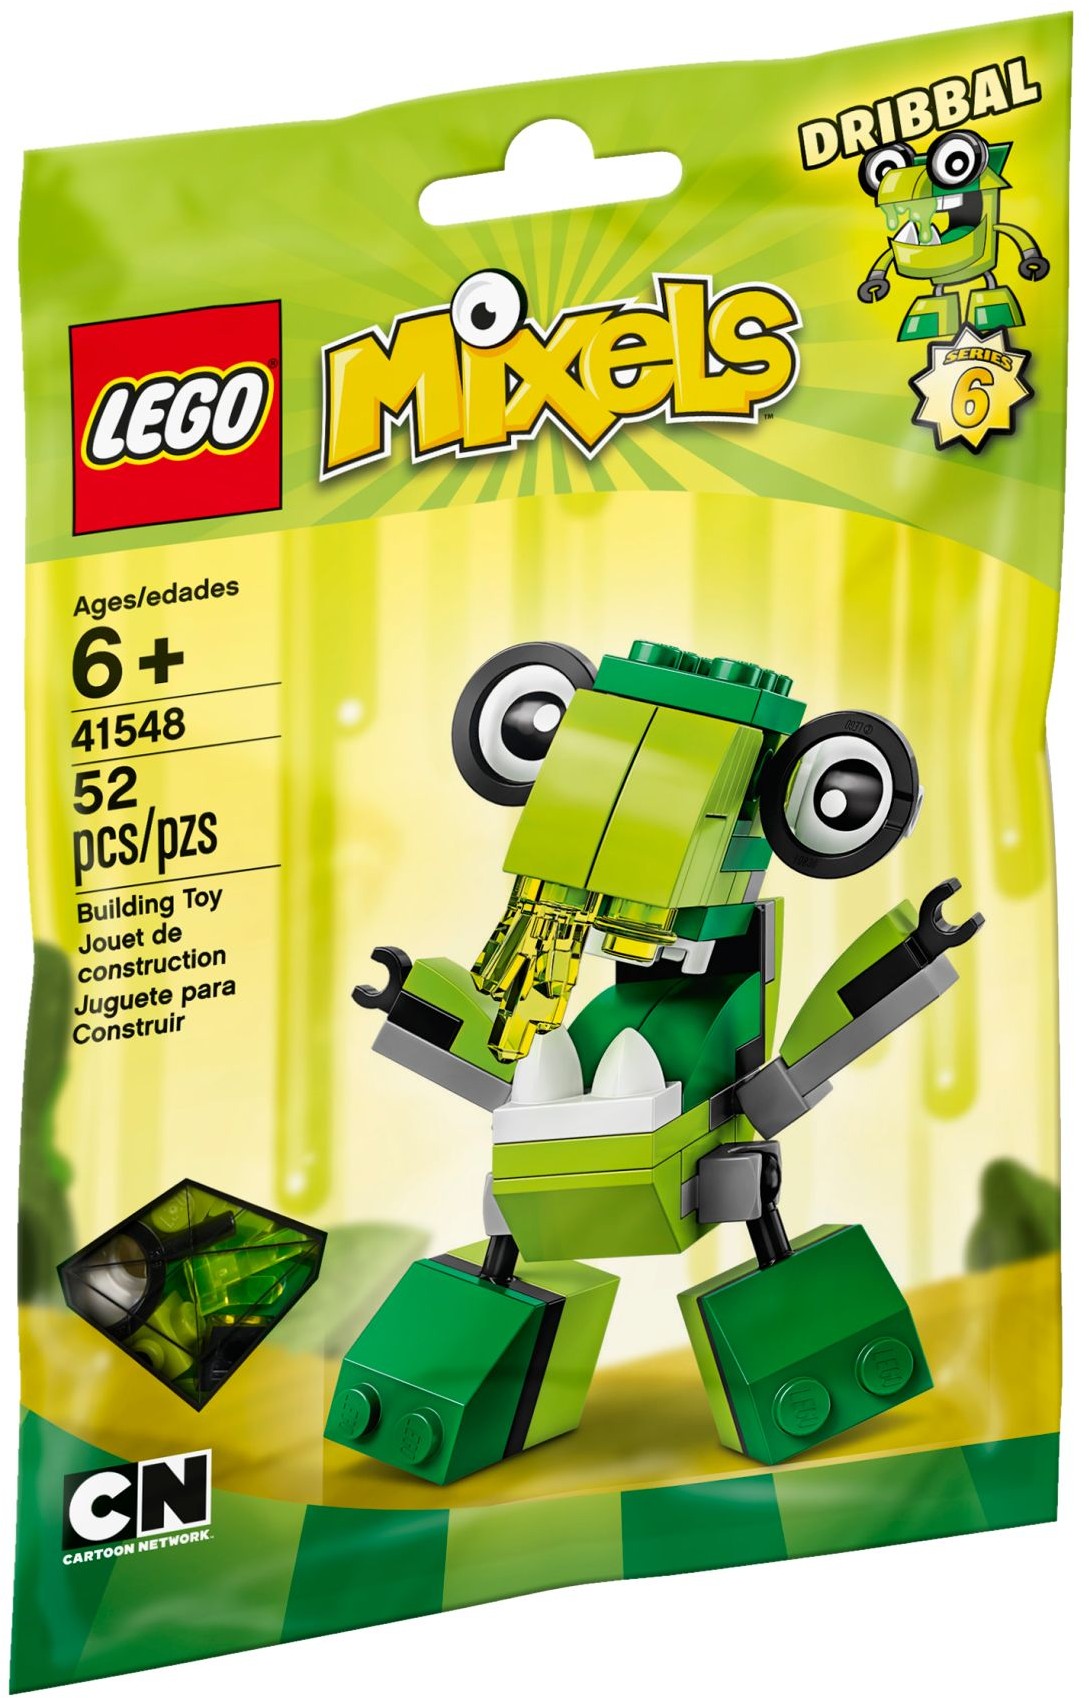 Lego Mixels Dribbal 6+ ani